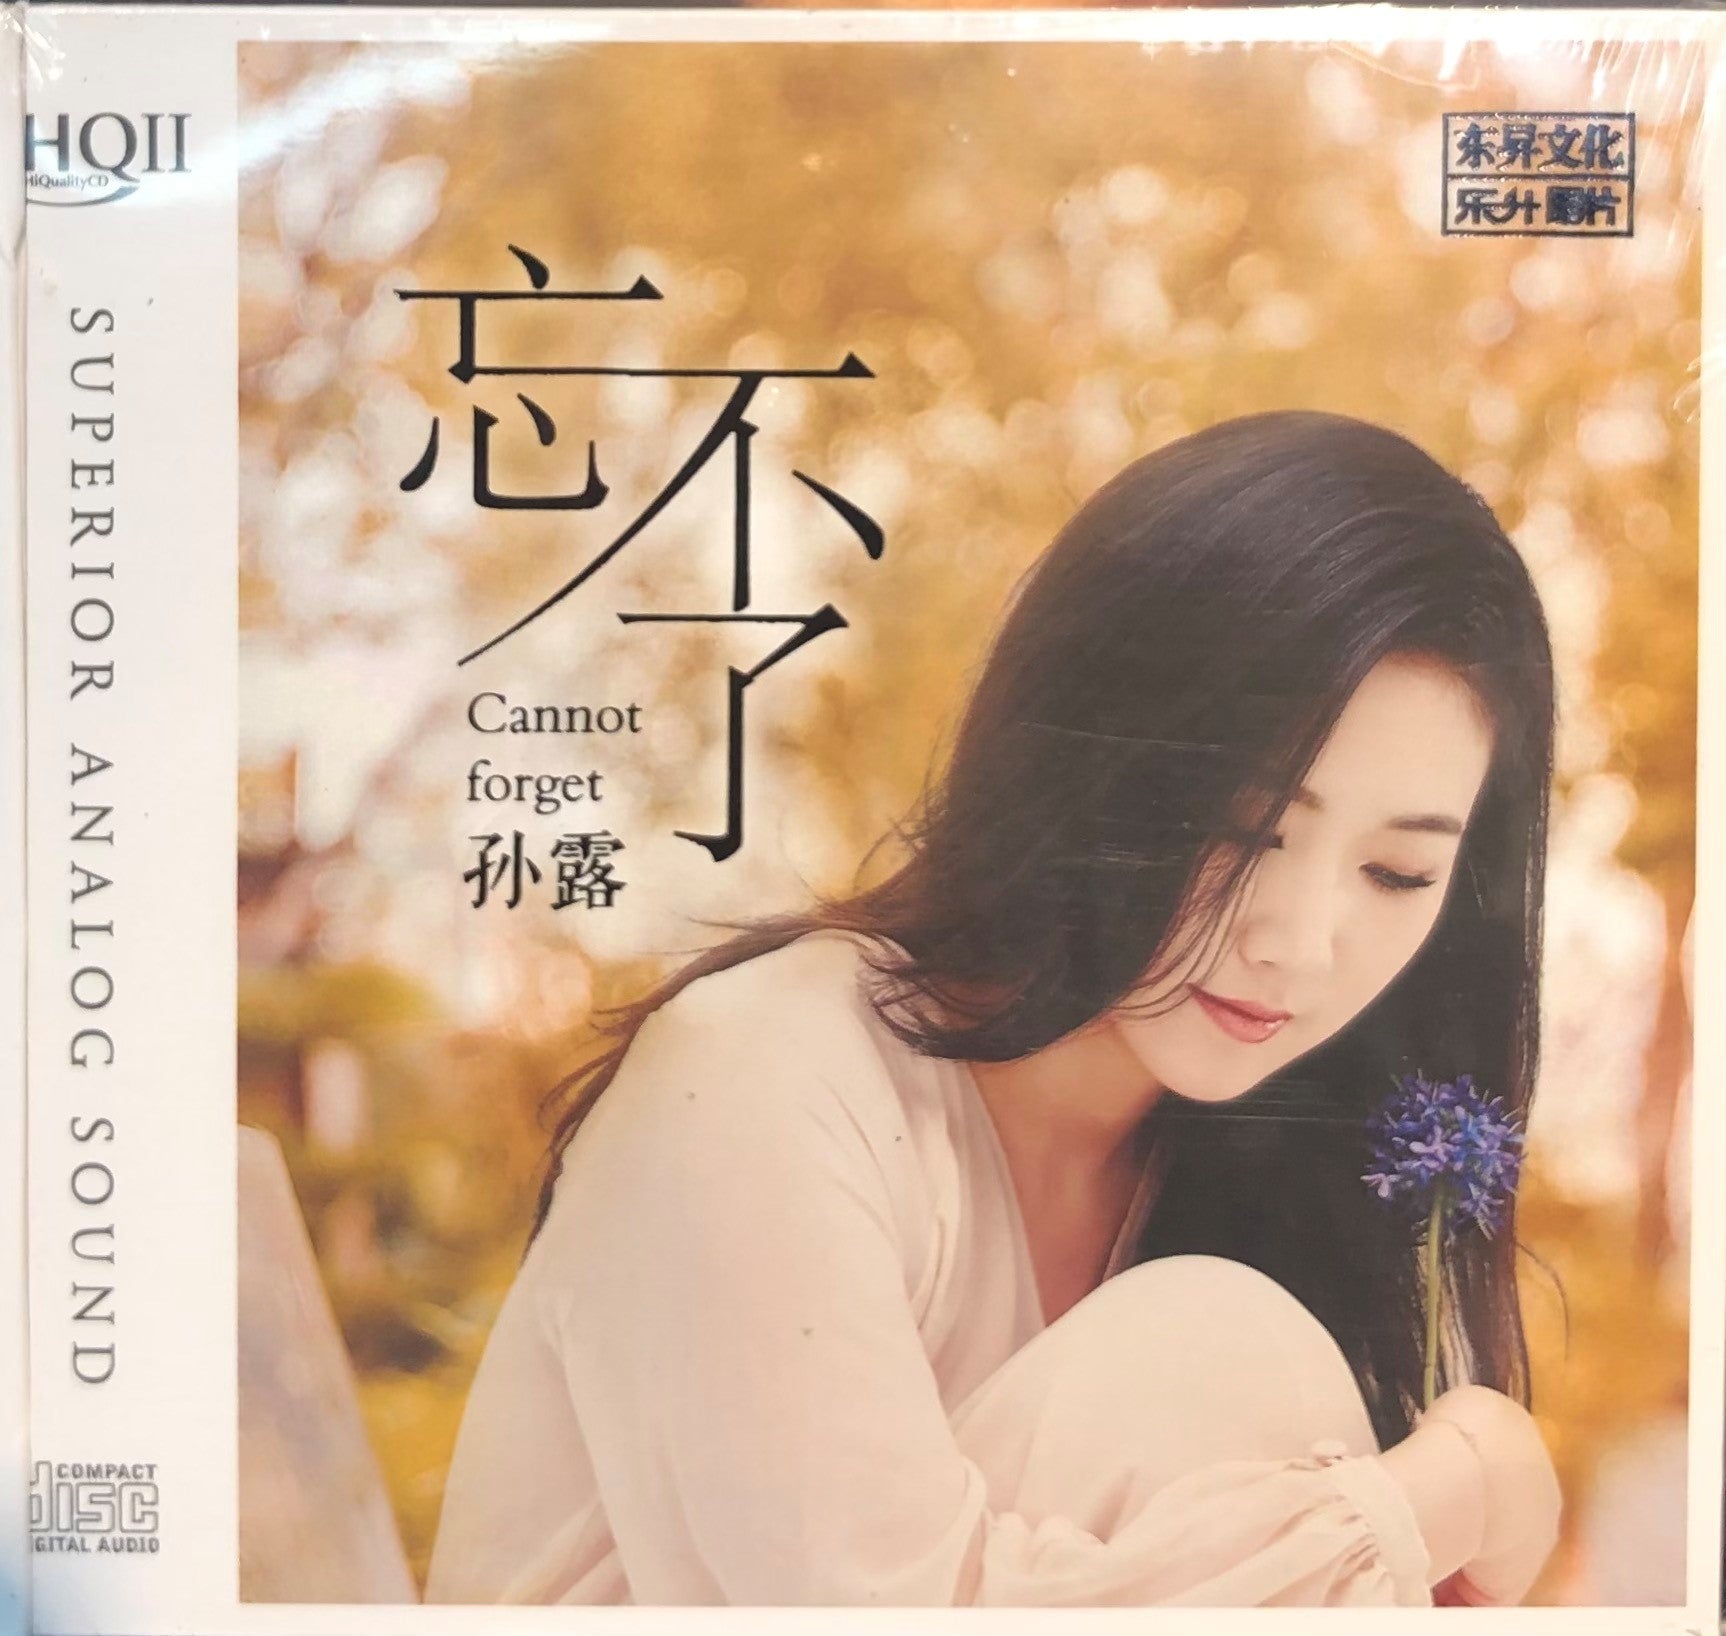 SU LU - 孫露CANNOT FORGET 忘不了(HQII) CD – MUSICCDHK